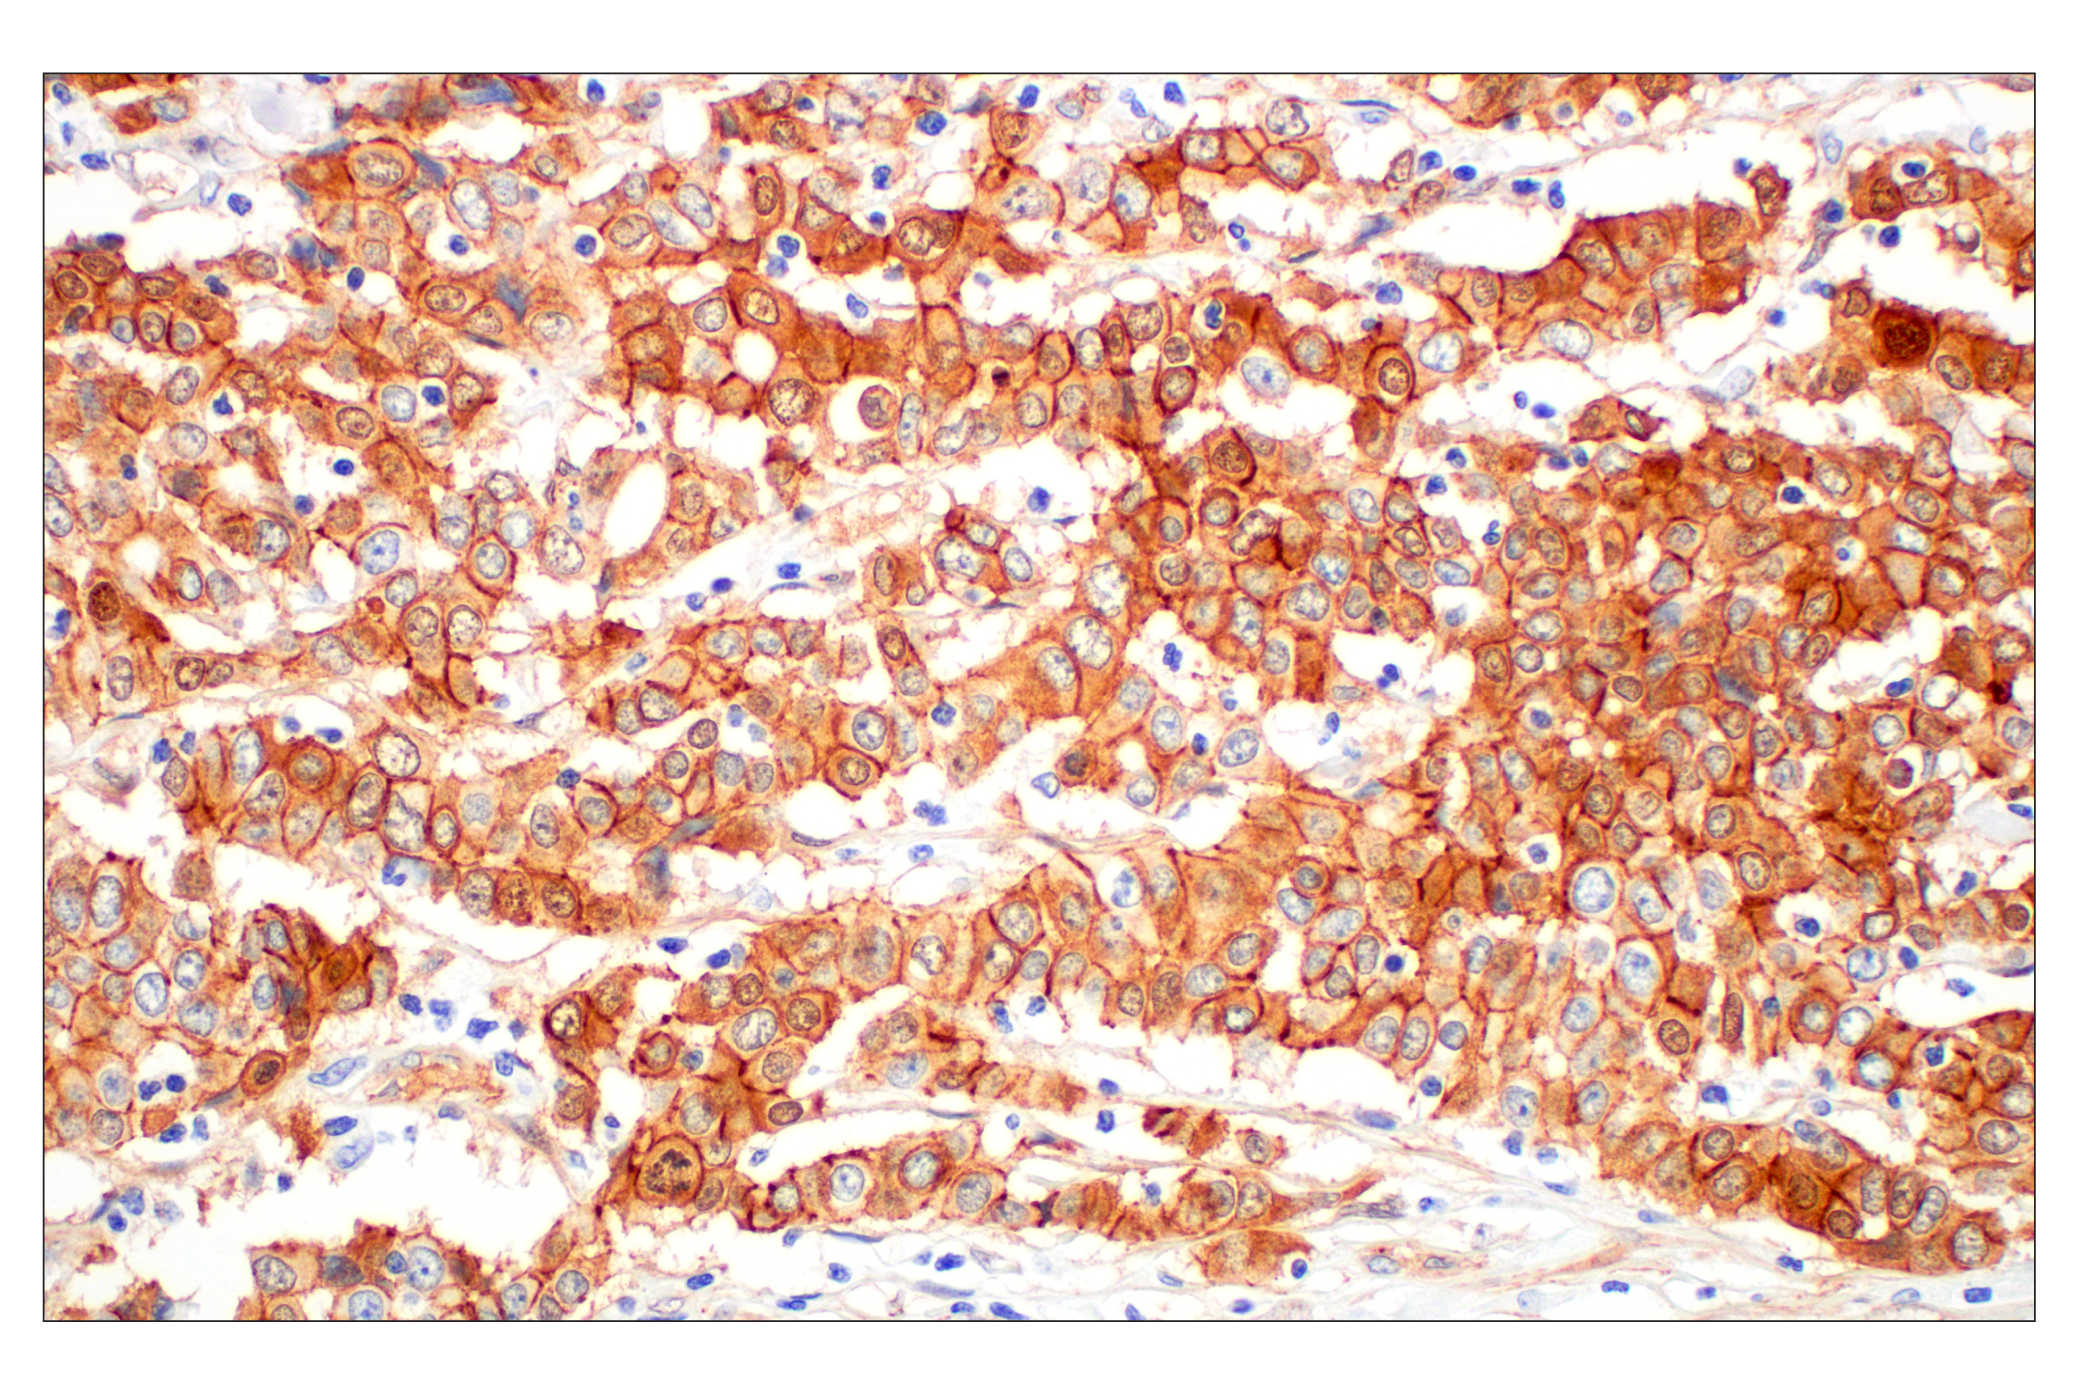  Image 41: Epithelial-Mesenchymal Transition (EMT) Antibody Sampler Kit